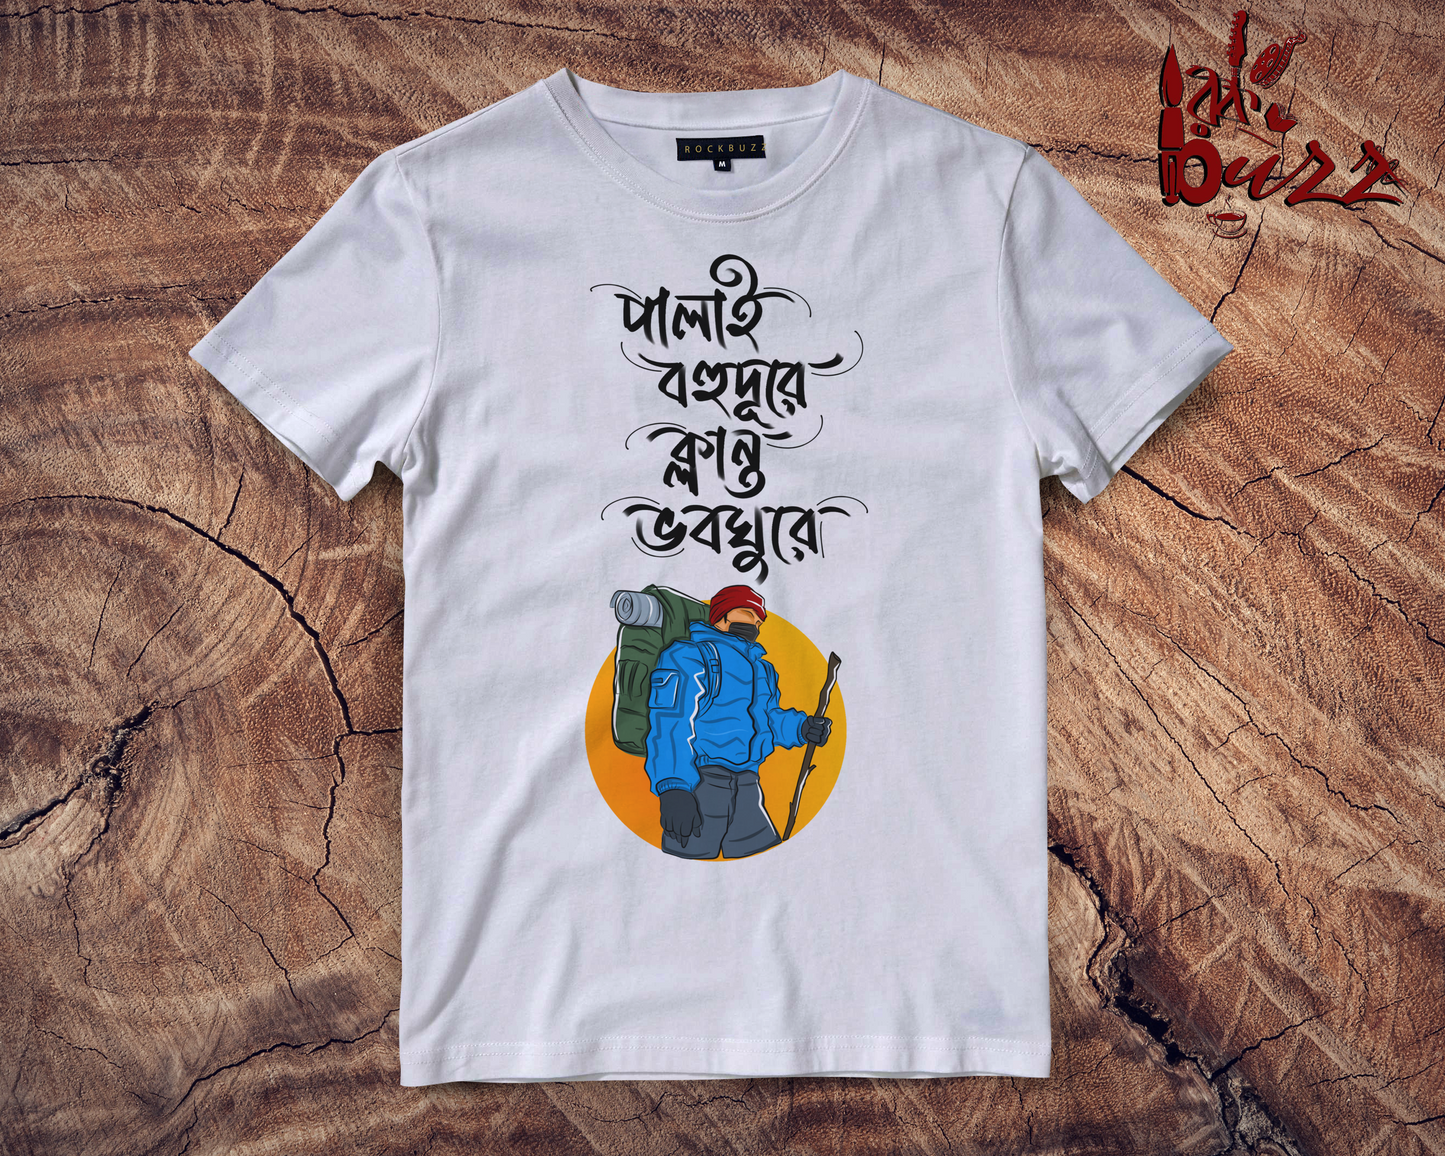 Bhoboghure printed tshirt